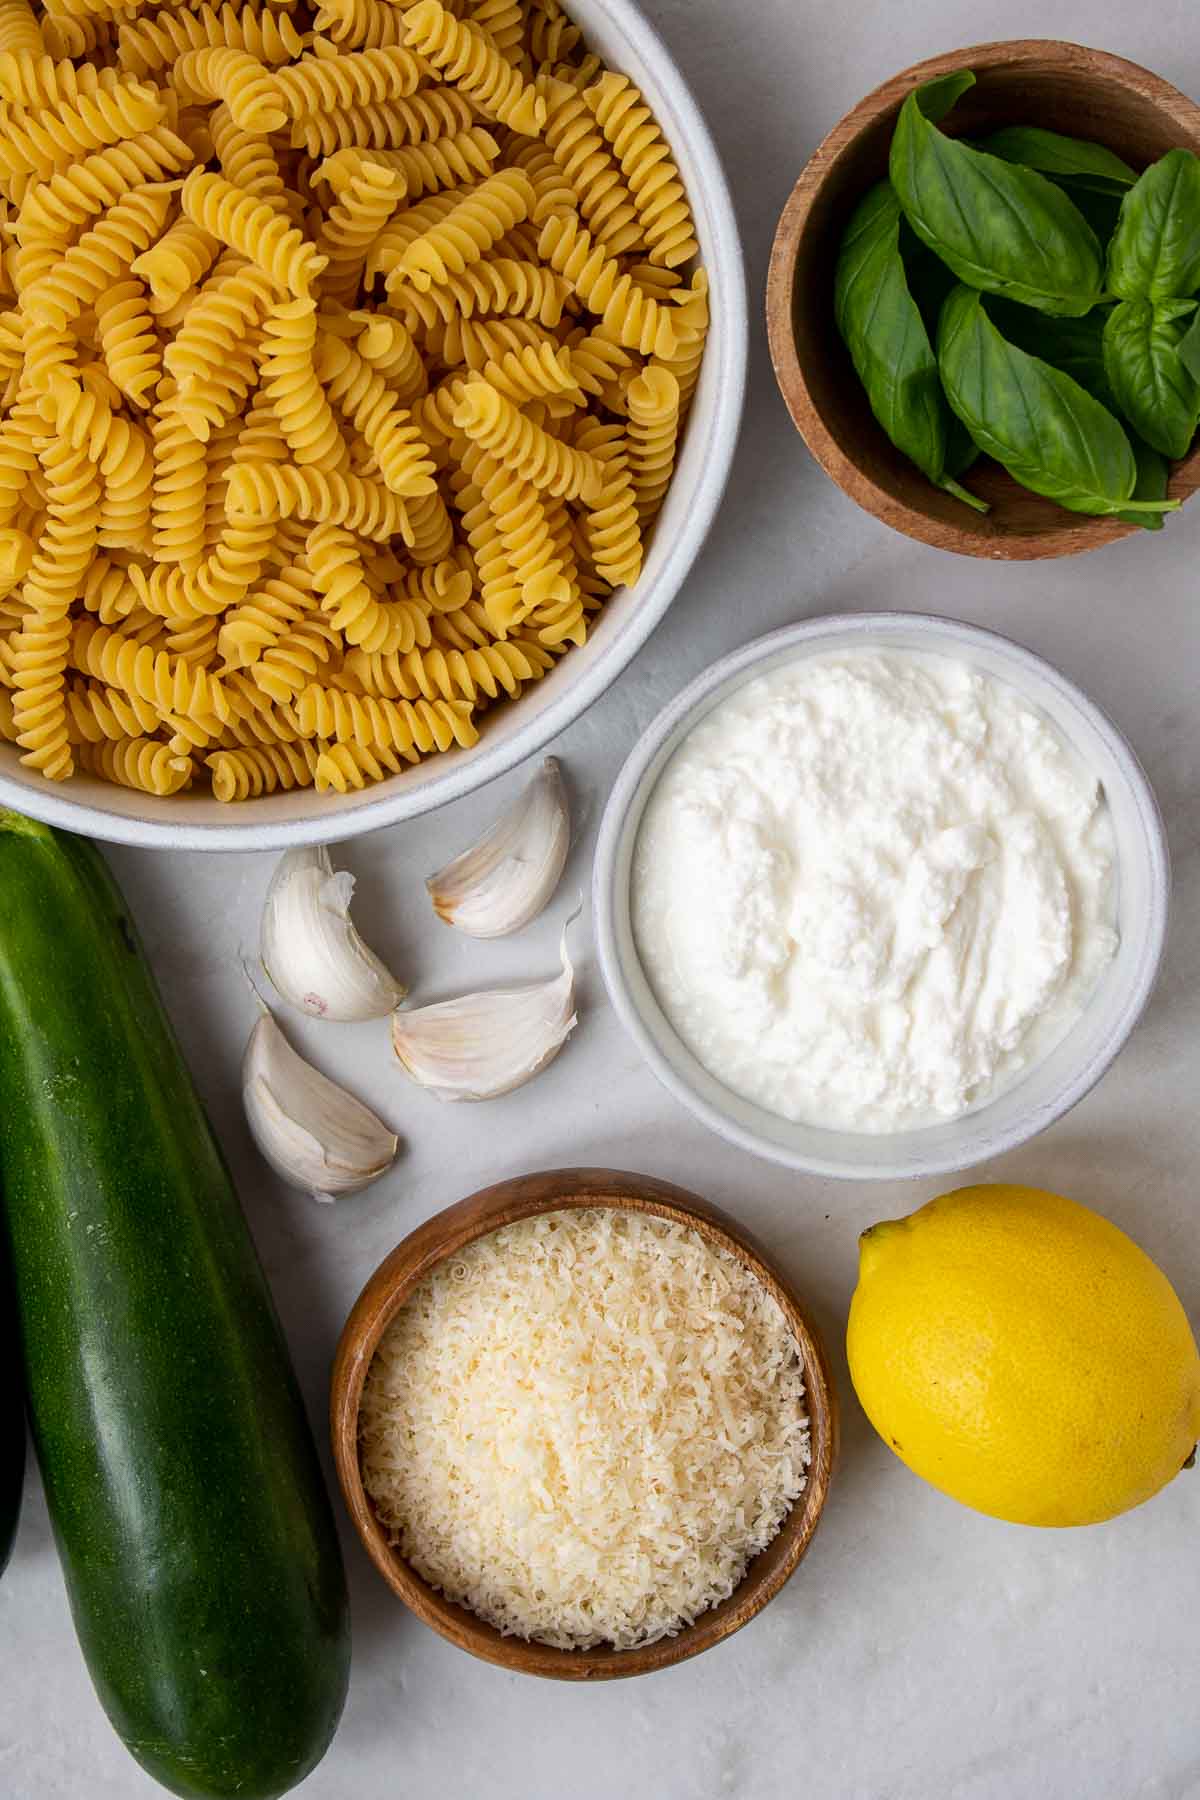 Ingredients for creamy zucchini pasta recipe: fusilli pasta, ricotta cheese, zucchini, garlic, parmesan cheese, lemon, and fresh basil.